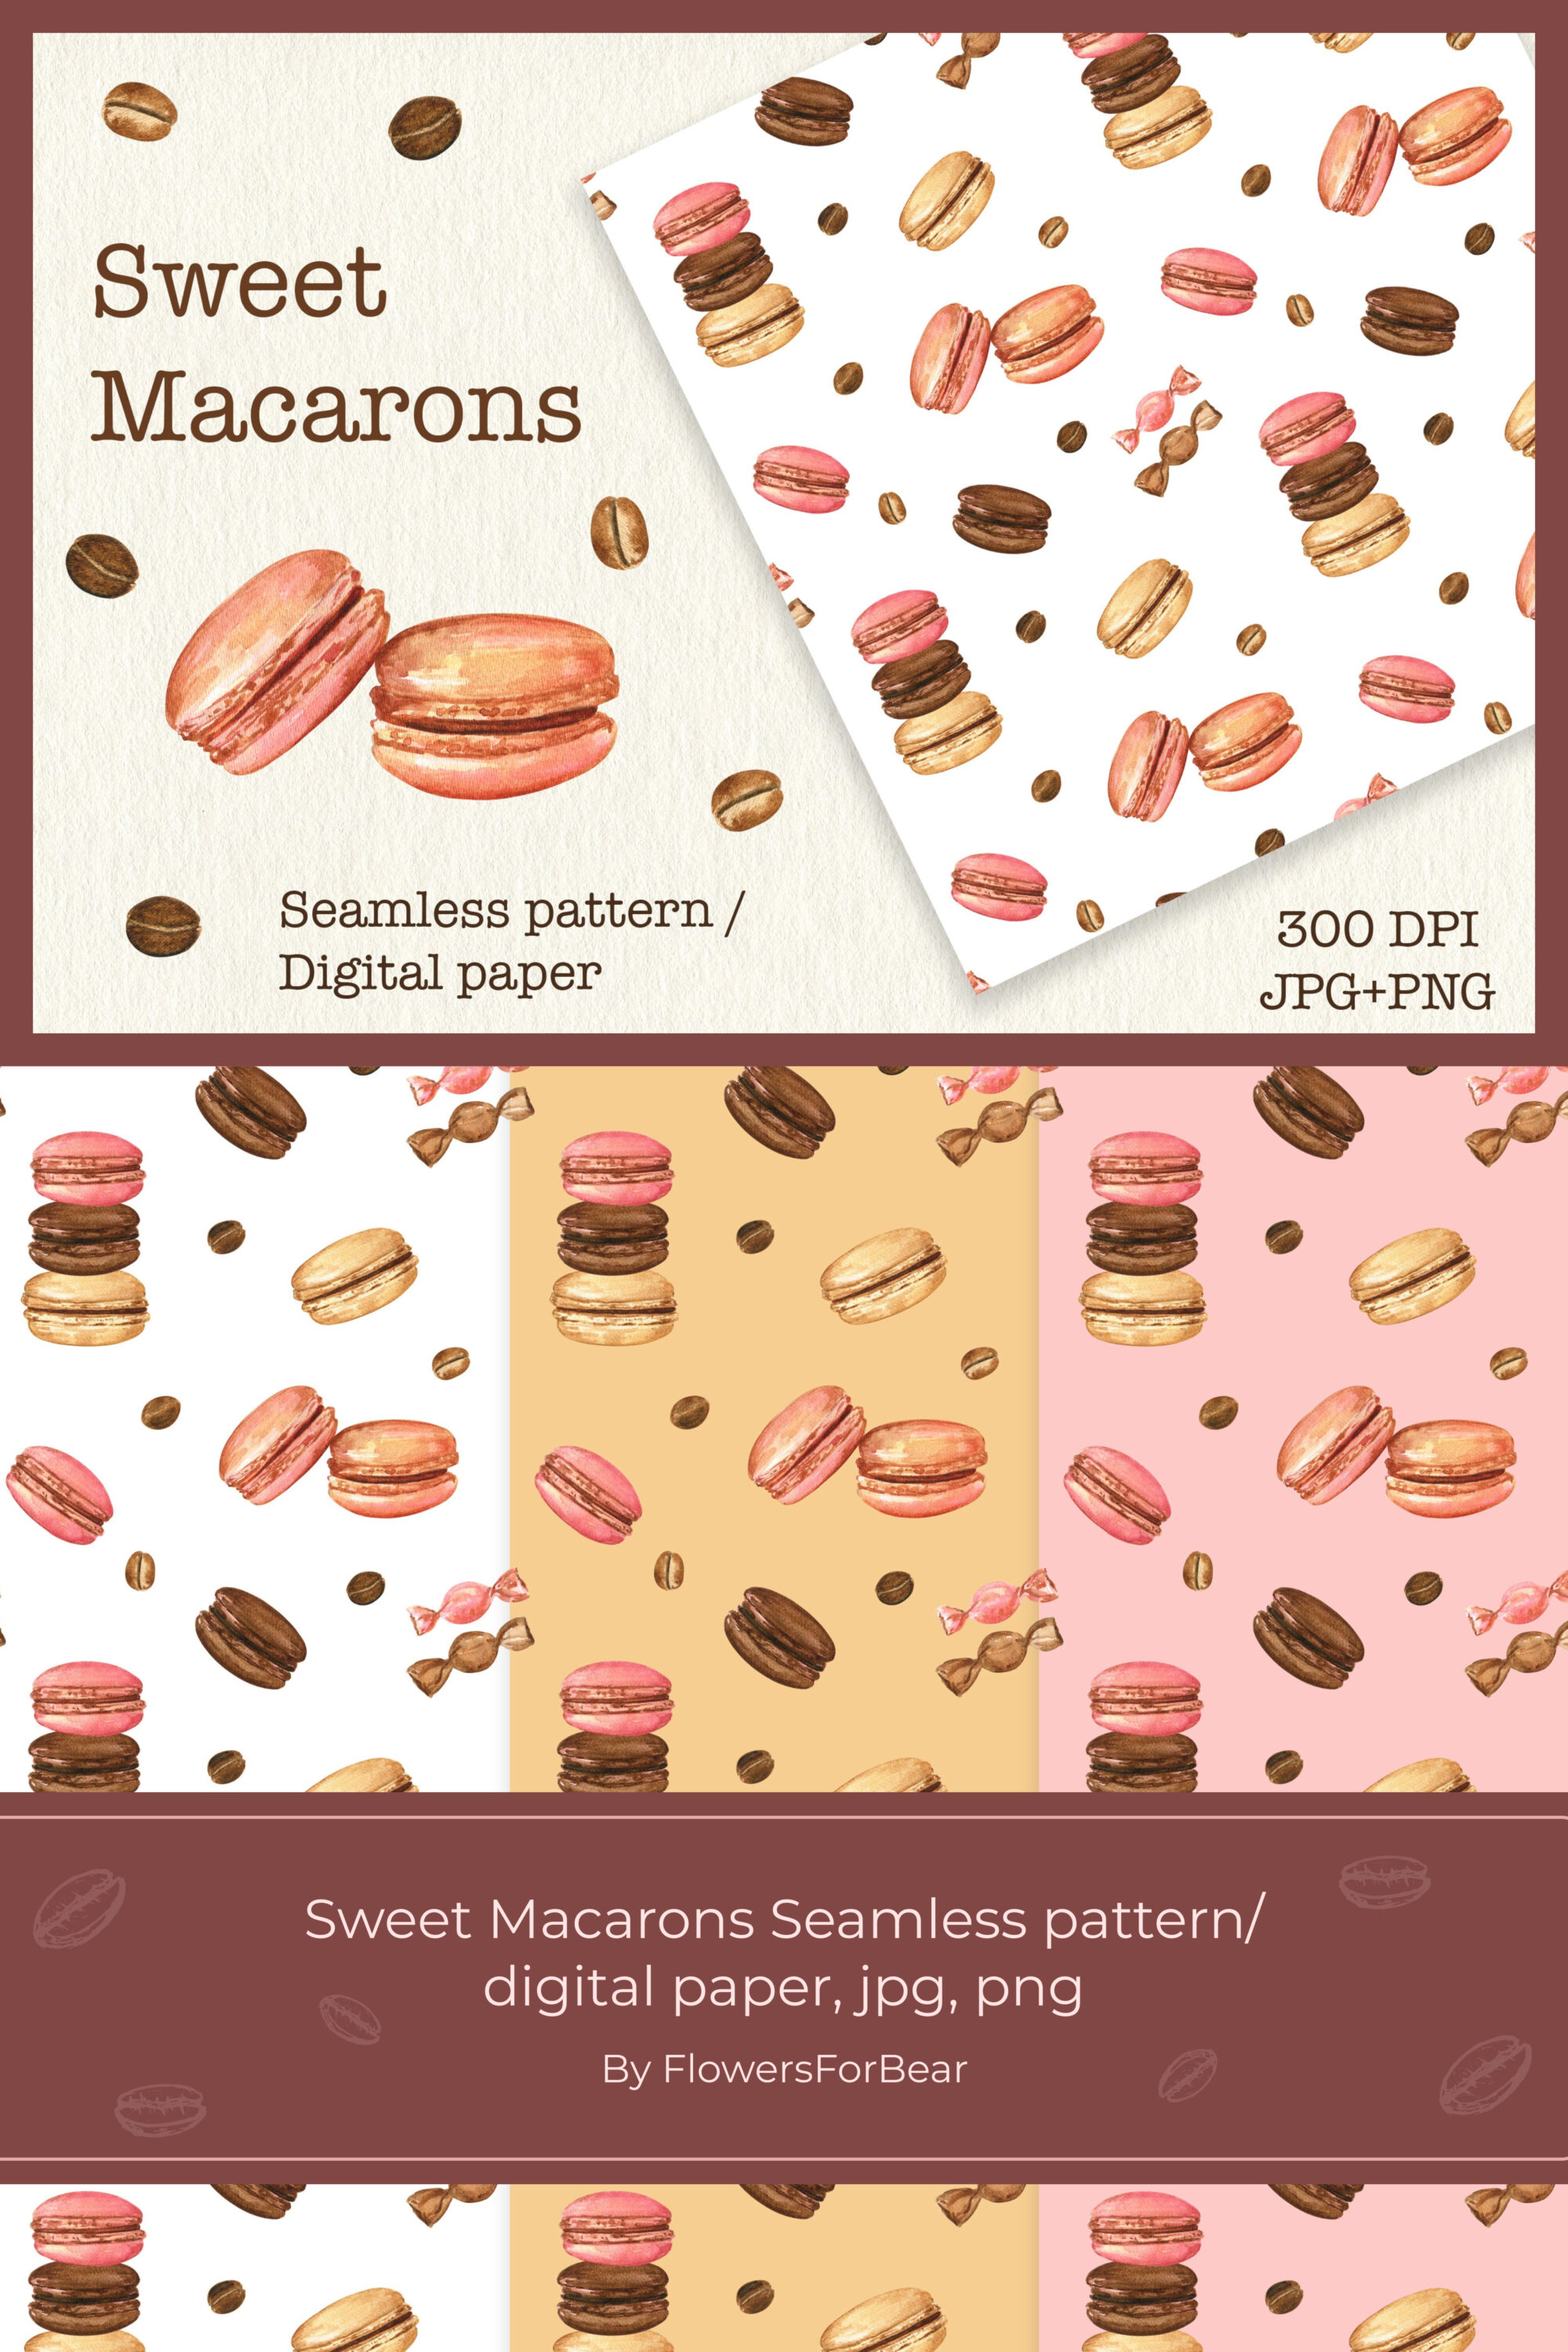 Sweet macarons seamless pattern digital paper of pinterest.